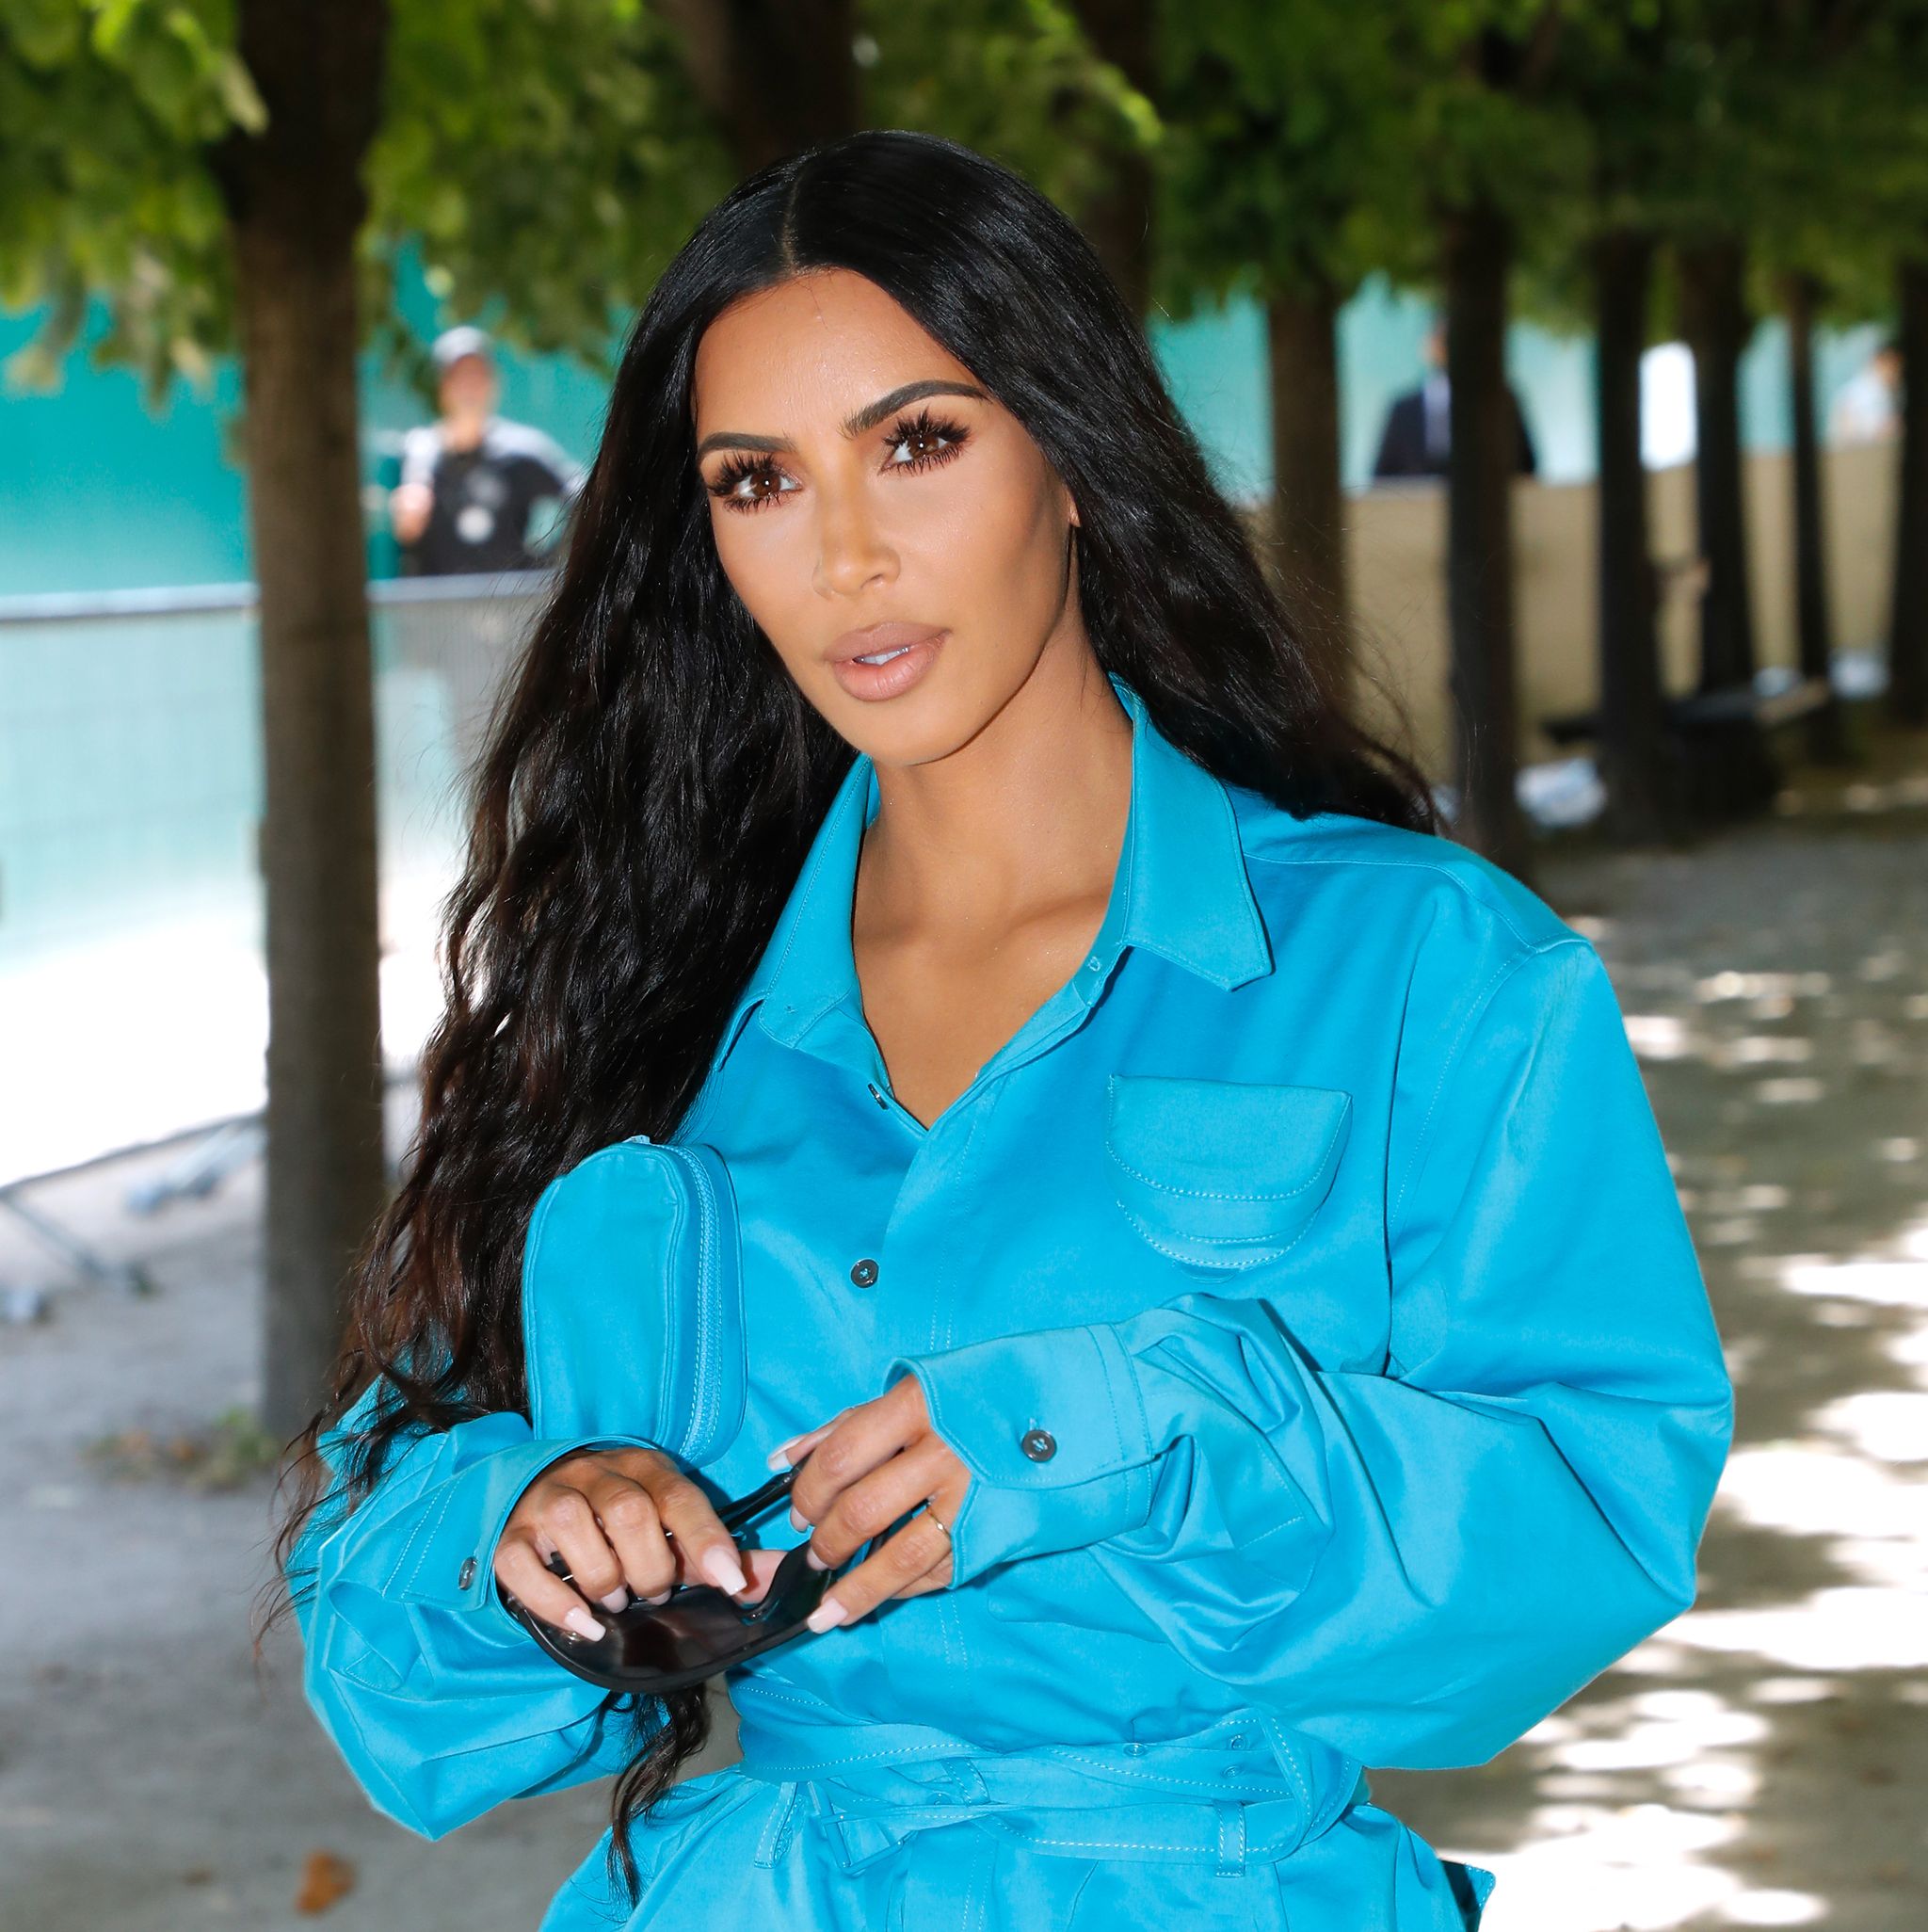 Kim Kardashian's New Shapewear Range 'Kimono' Sparks Backlash